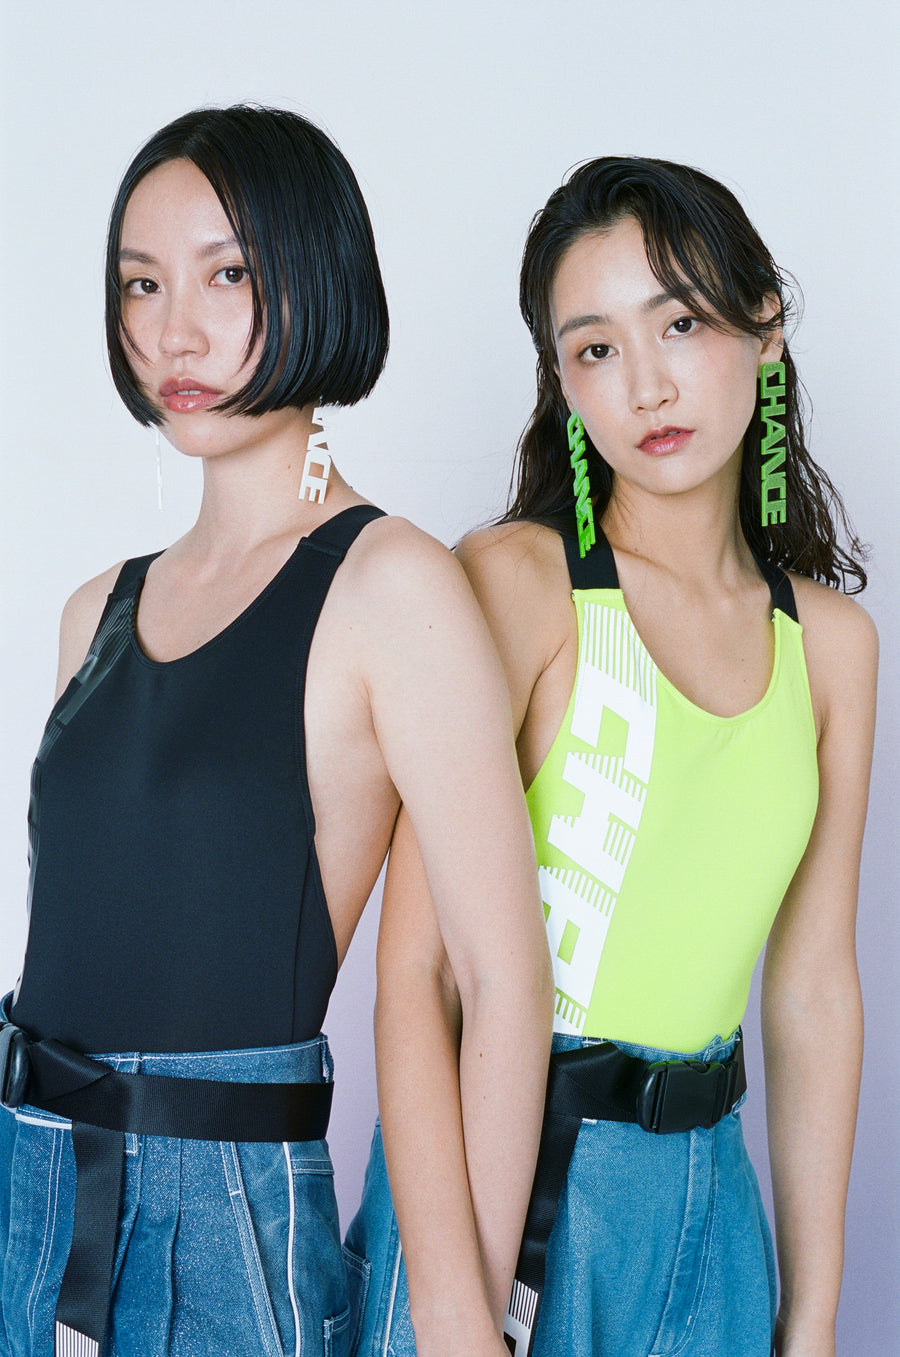 Neon Green Buckle Reflective Bodysuit